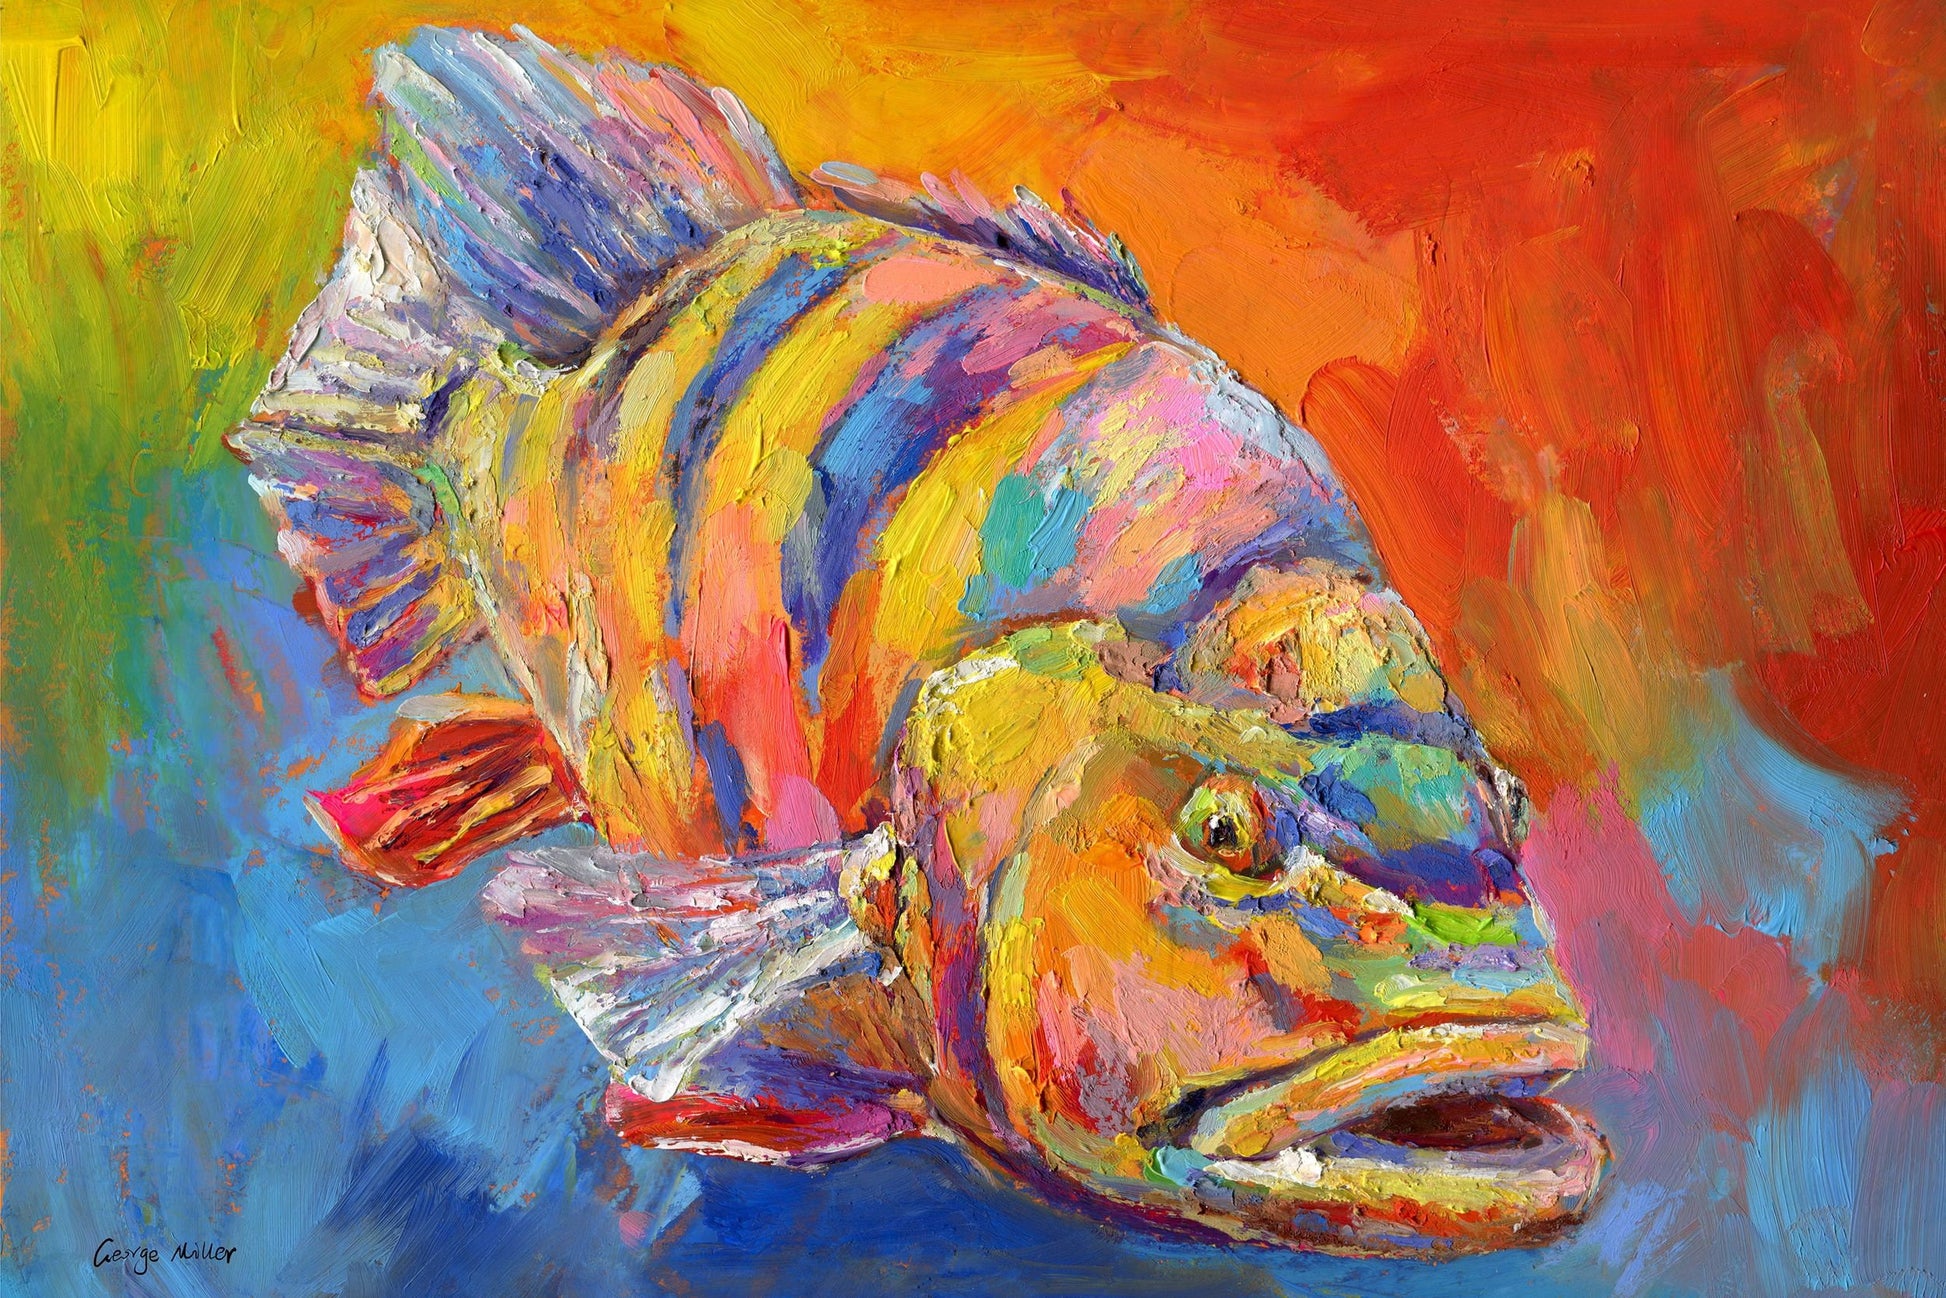 Canvas Print Colorful Fish, Wall Prints, Abstract Art Prints, Art, Artwork Original, Modern Wall Décor, Original Painting, Wall Décor